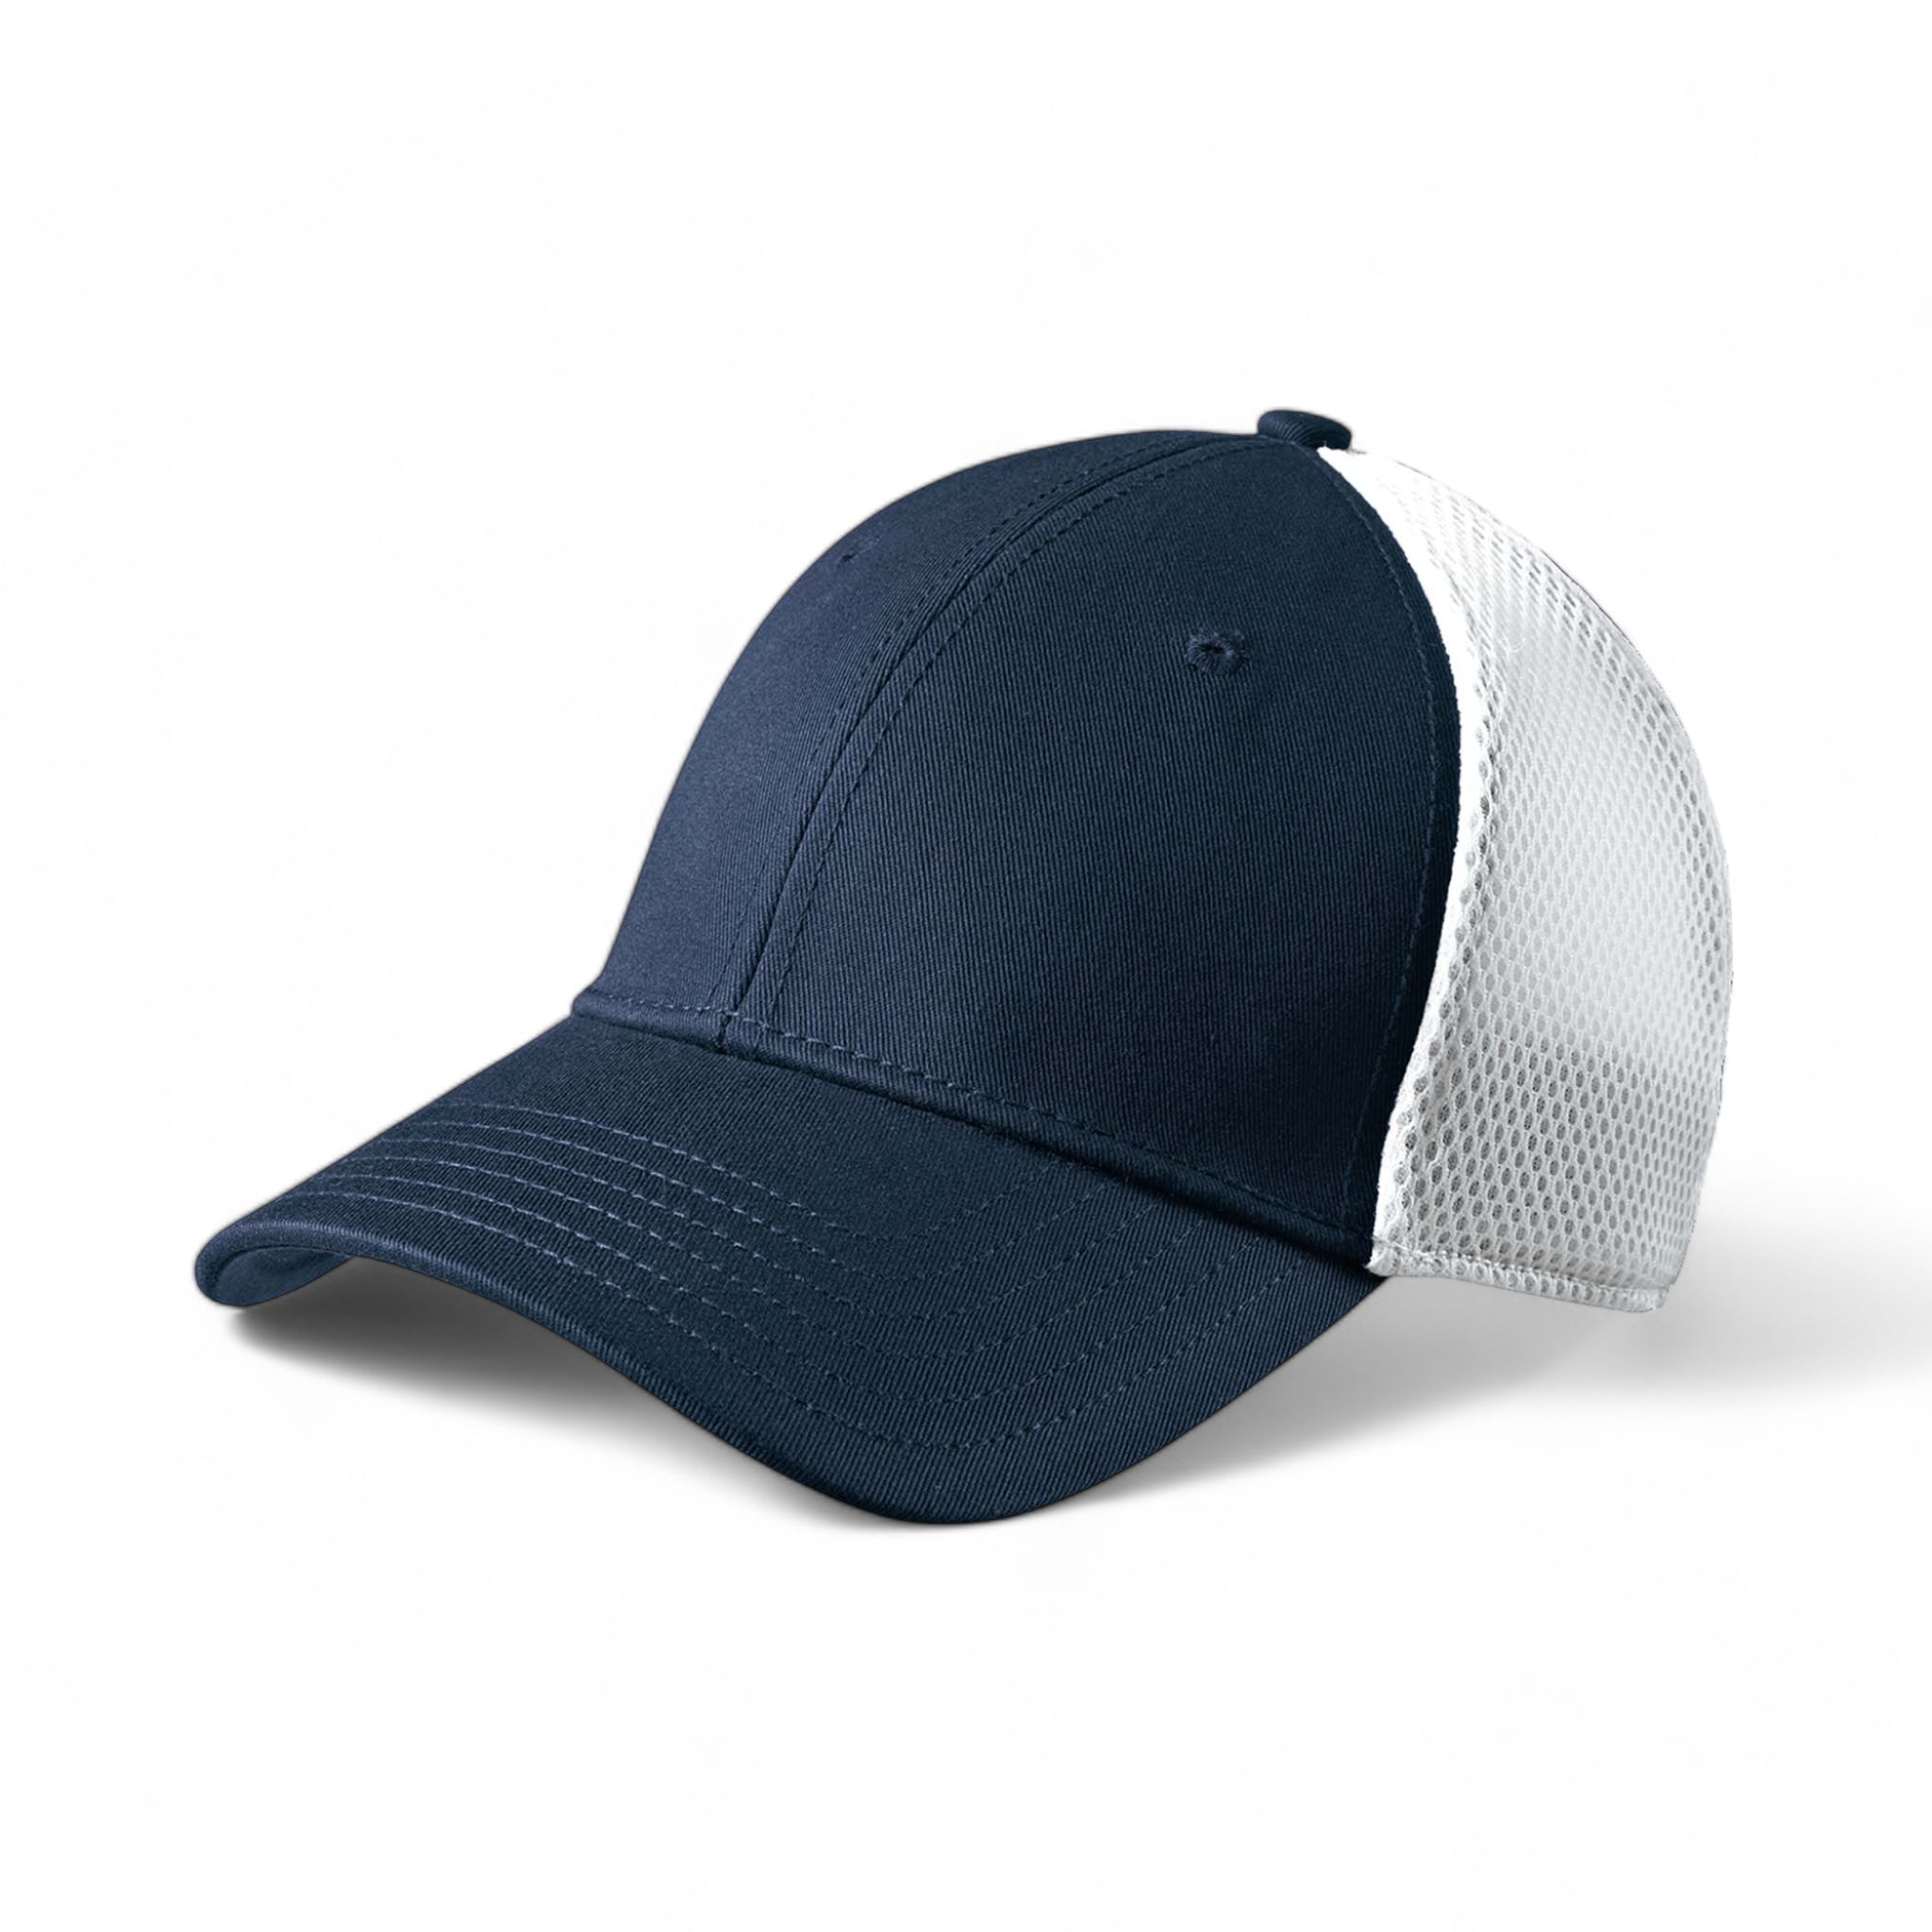 Side view of New Era NE1020 custom hat in deep navy and white